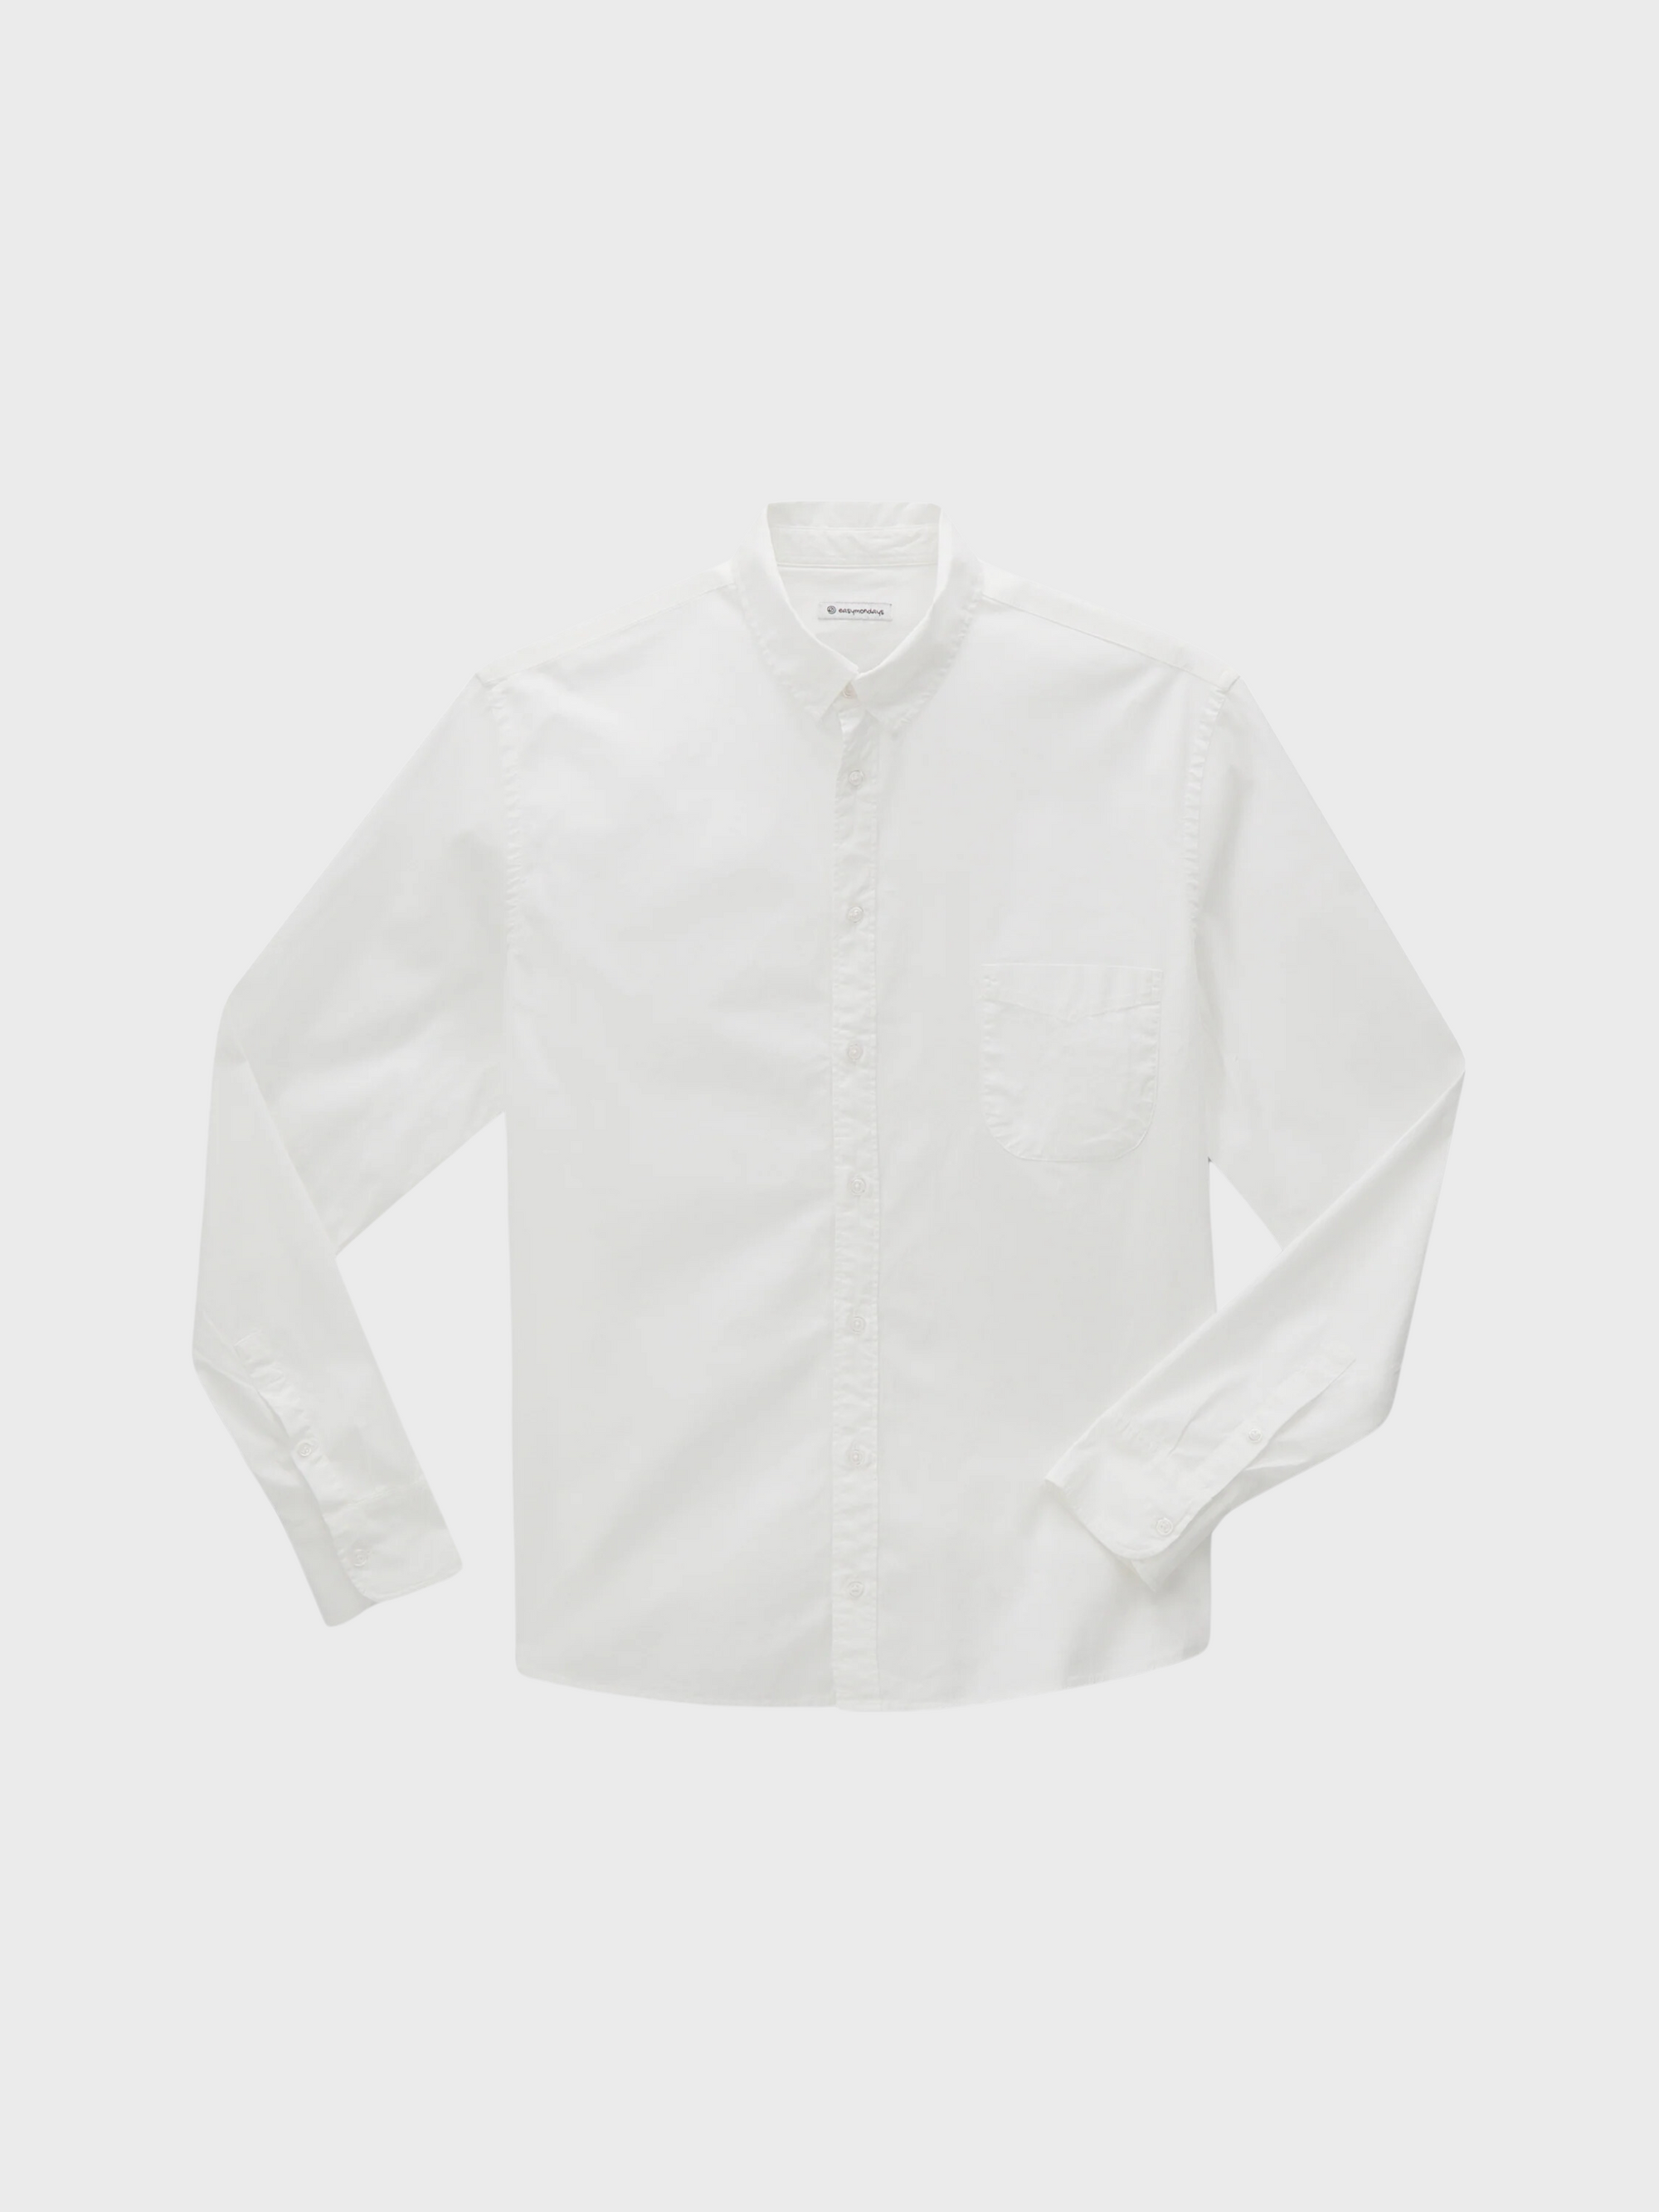 Easy Mondays Poplin Shirt White SS24-Men's Shirts-Brooklyn-Vancouver-Yaletown-Canada